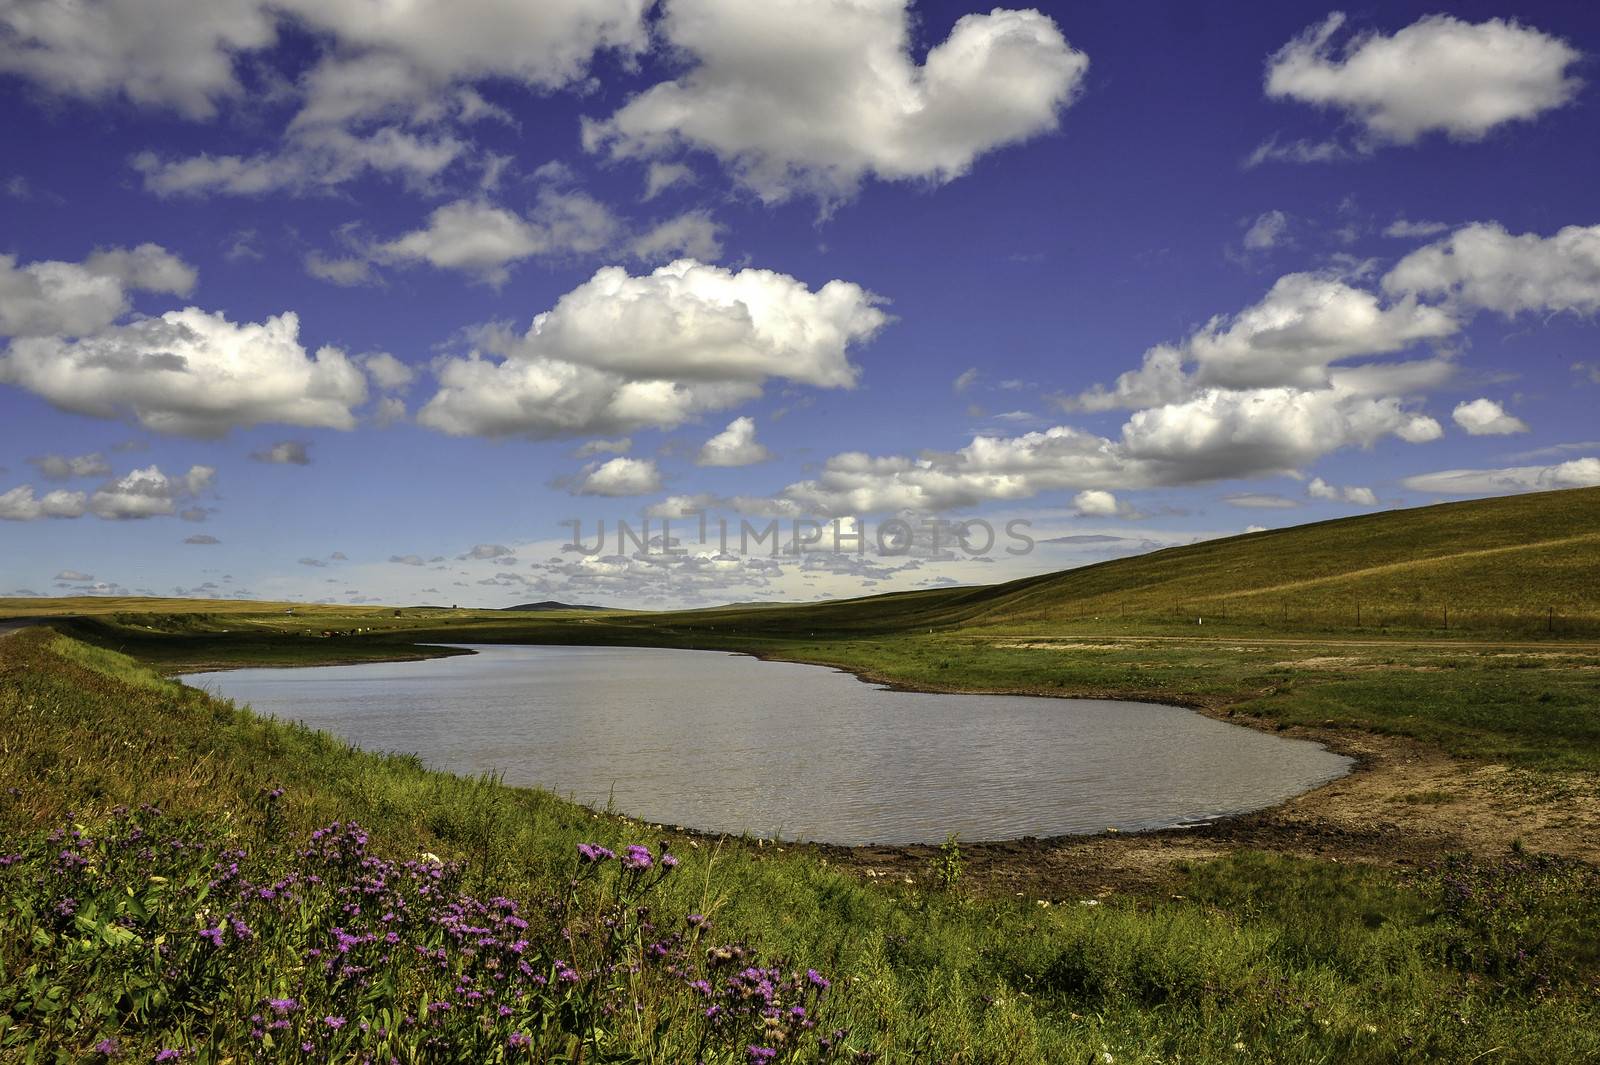 The nature beautiful Hulun prairie in Inner Mongolia, China.